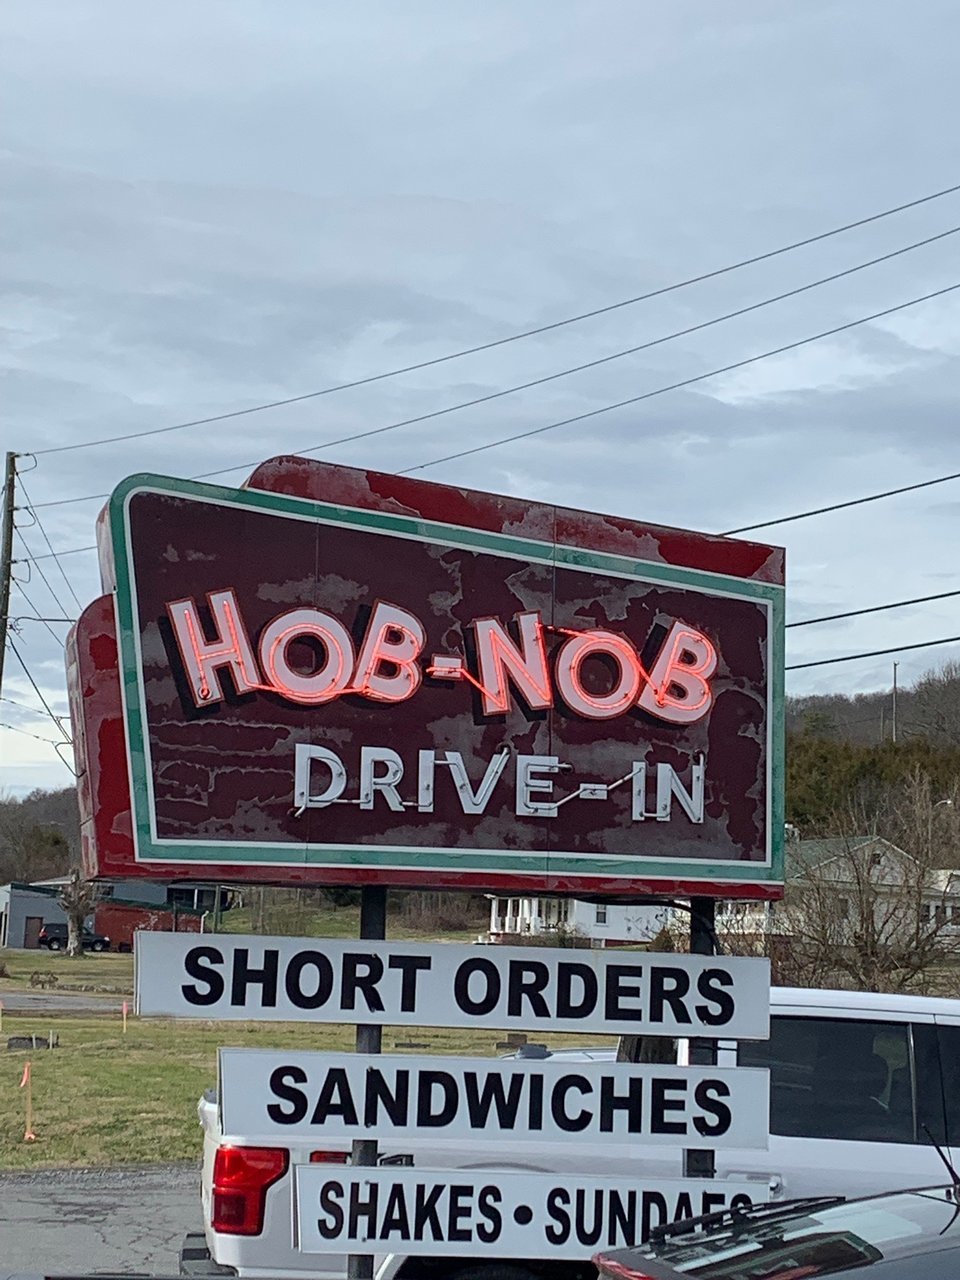 Hob-Nob Drive-In